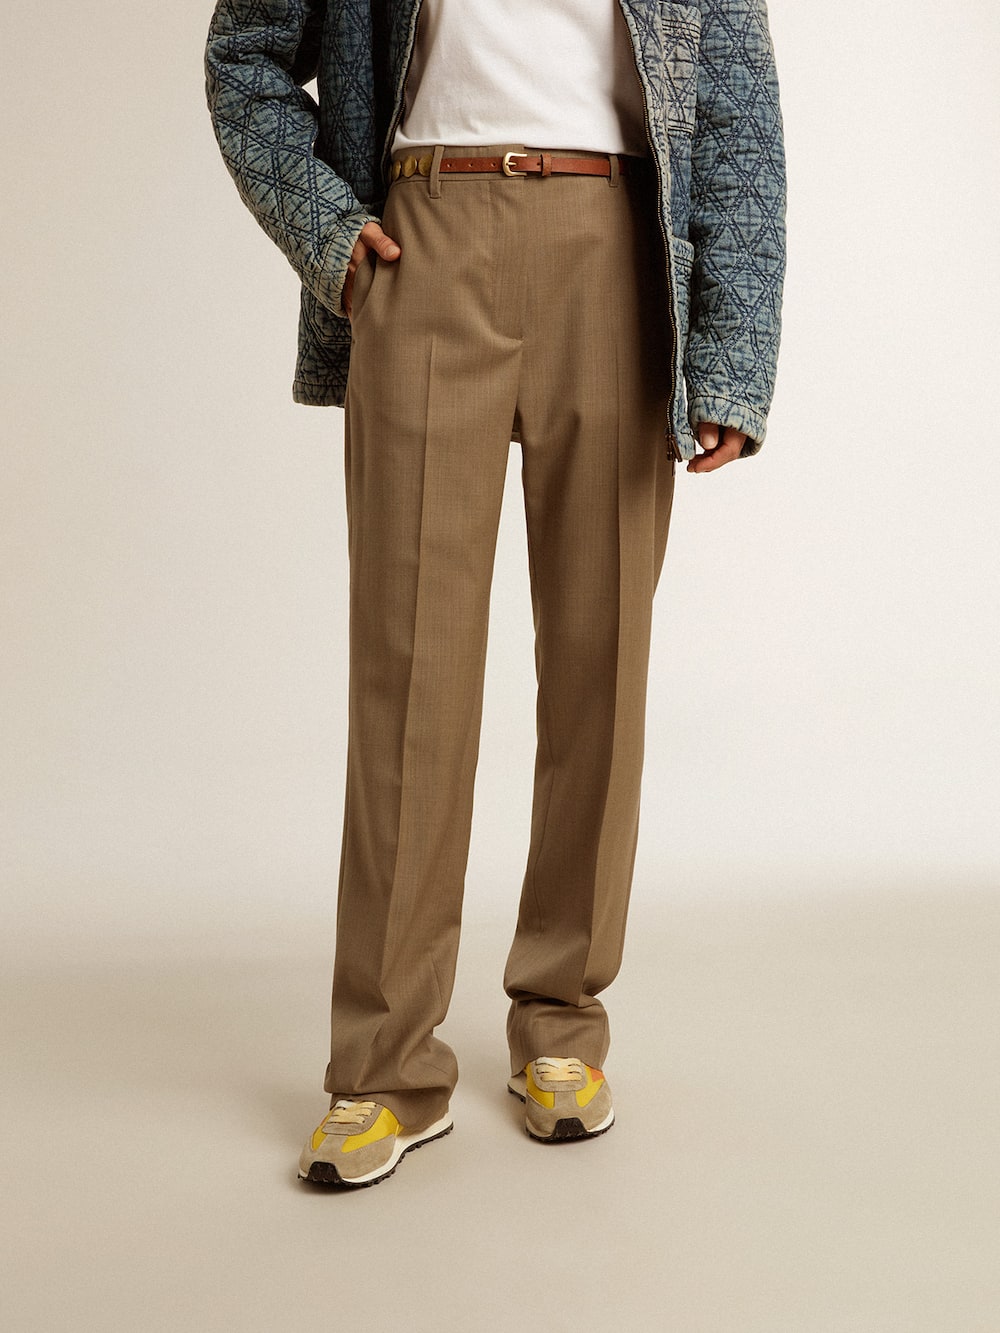 Golden Goose - Pantalone da donna in tessuto sartoriale di lana di colore tortora in 